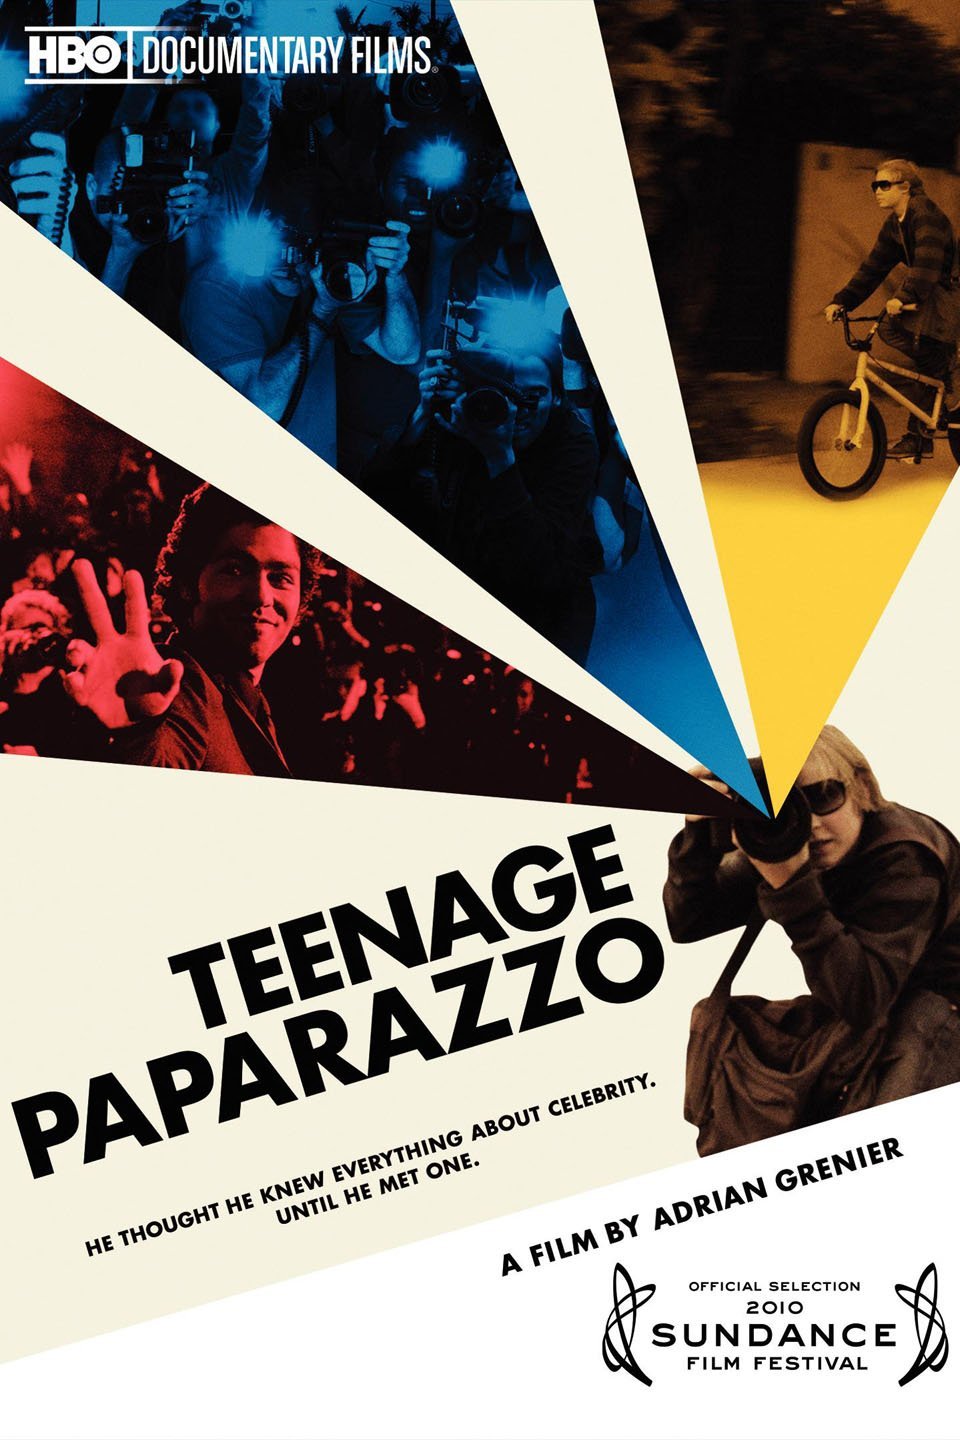 Poster of the movie Teenage Paparazzo